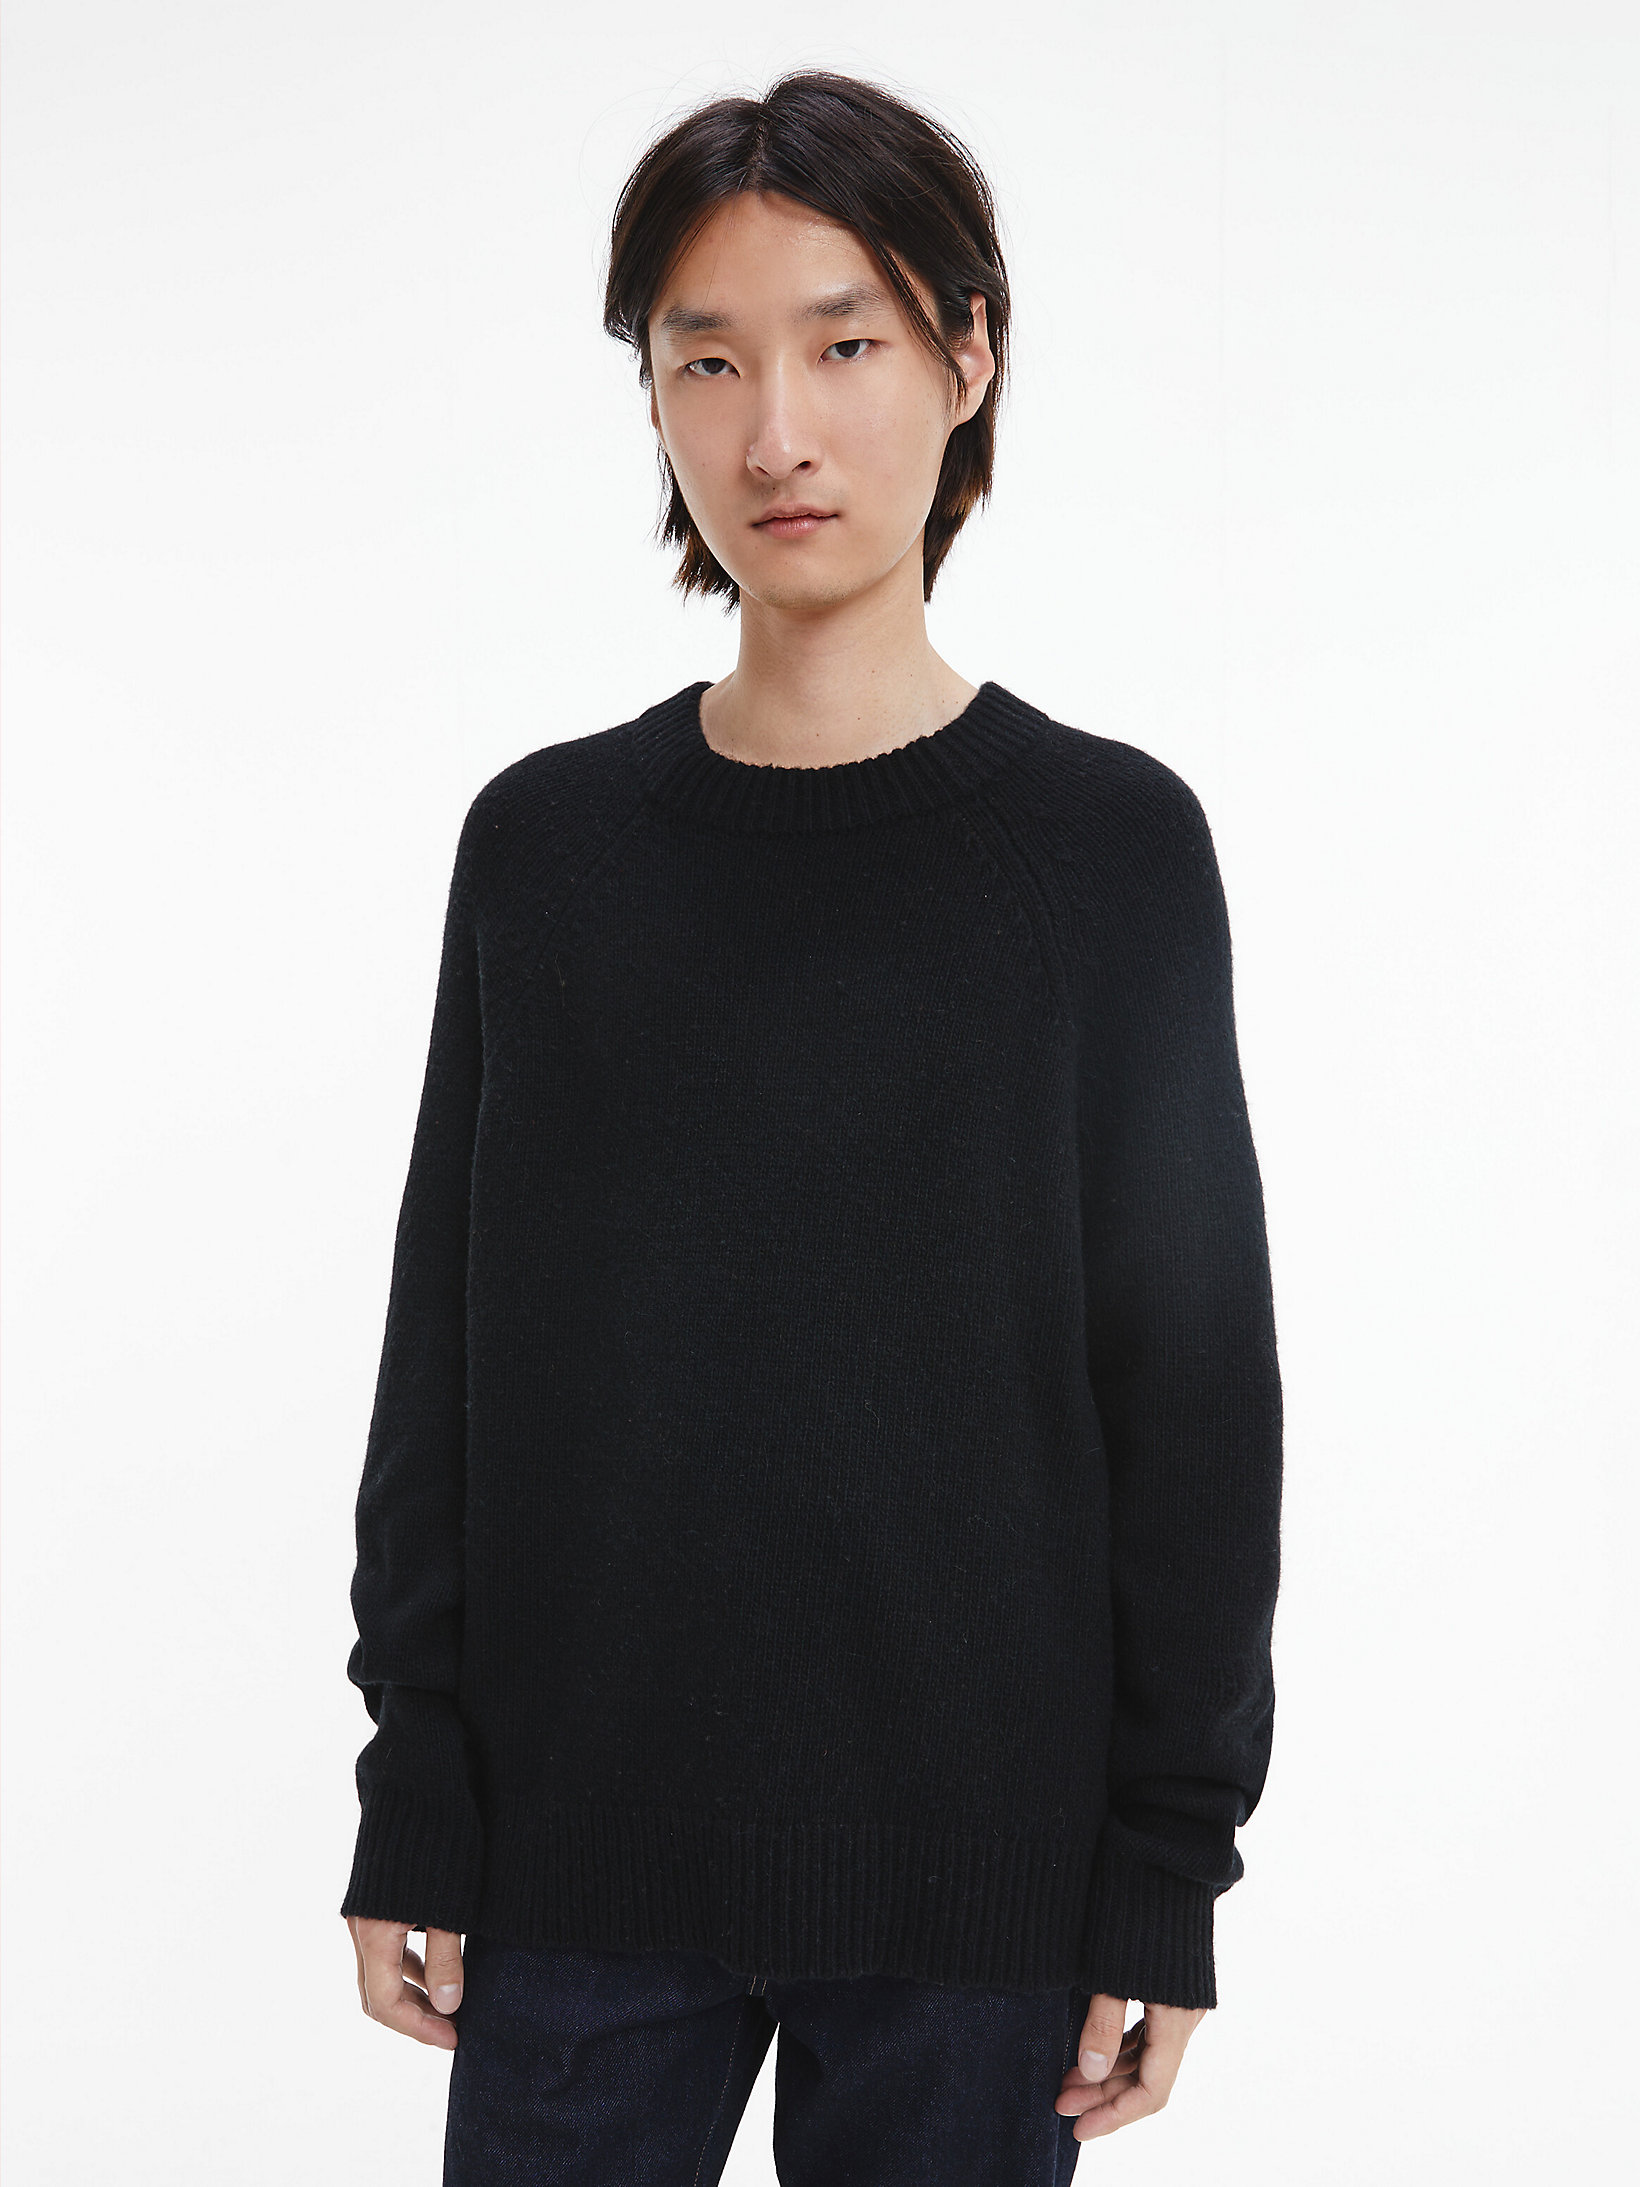 Black Beauty Unisex Wool Blend Jumper - CK Standards undefined unisex Calvin Klein